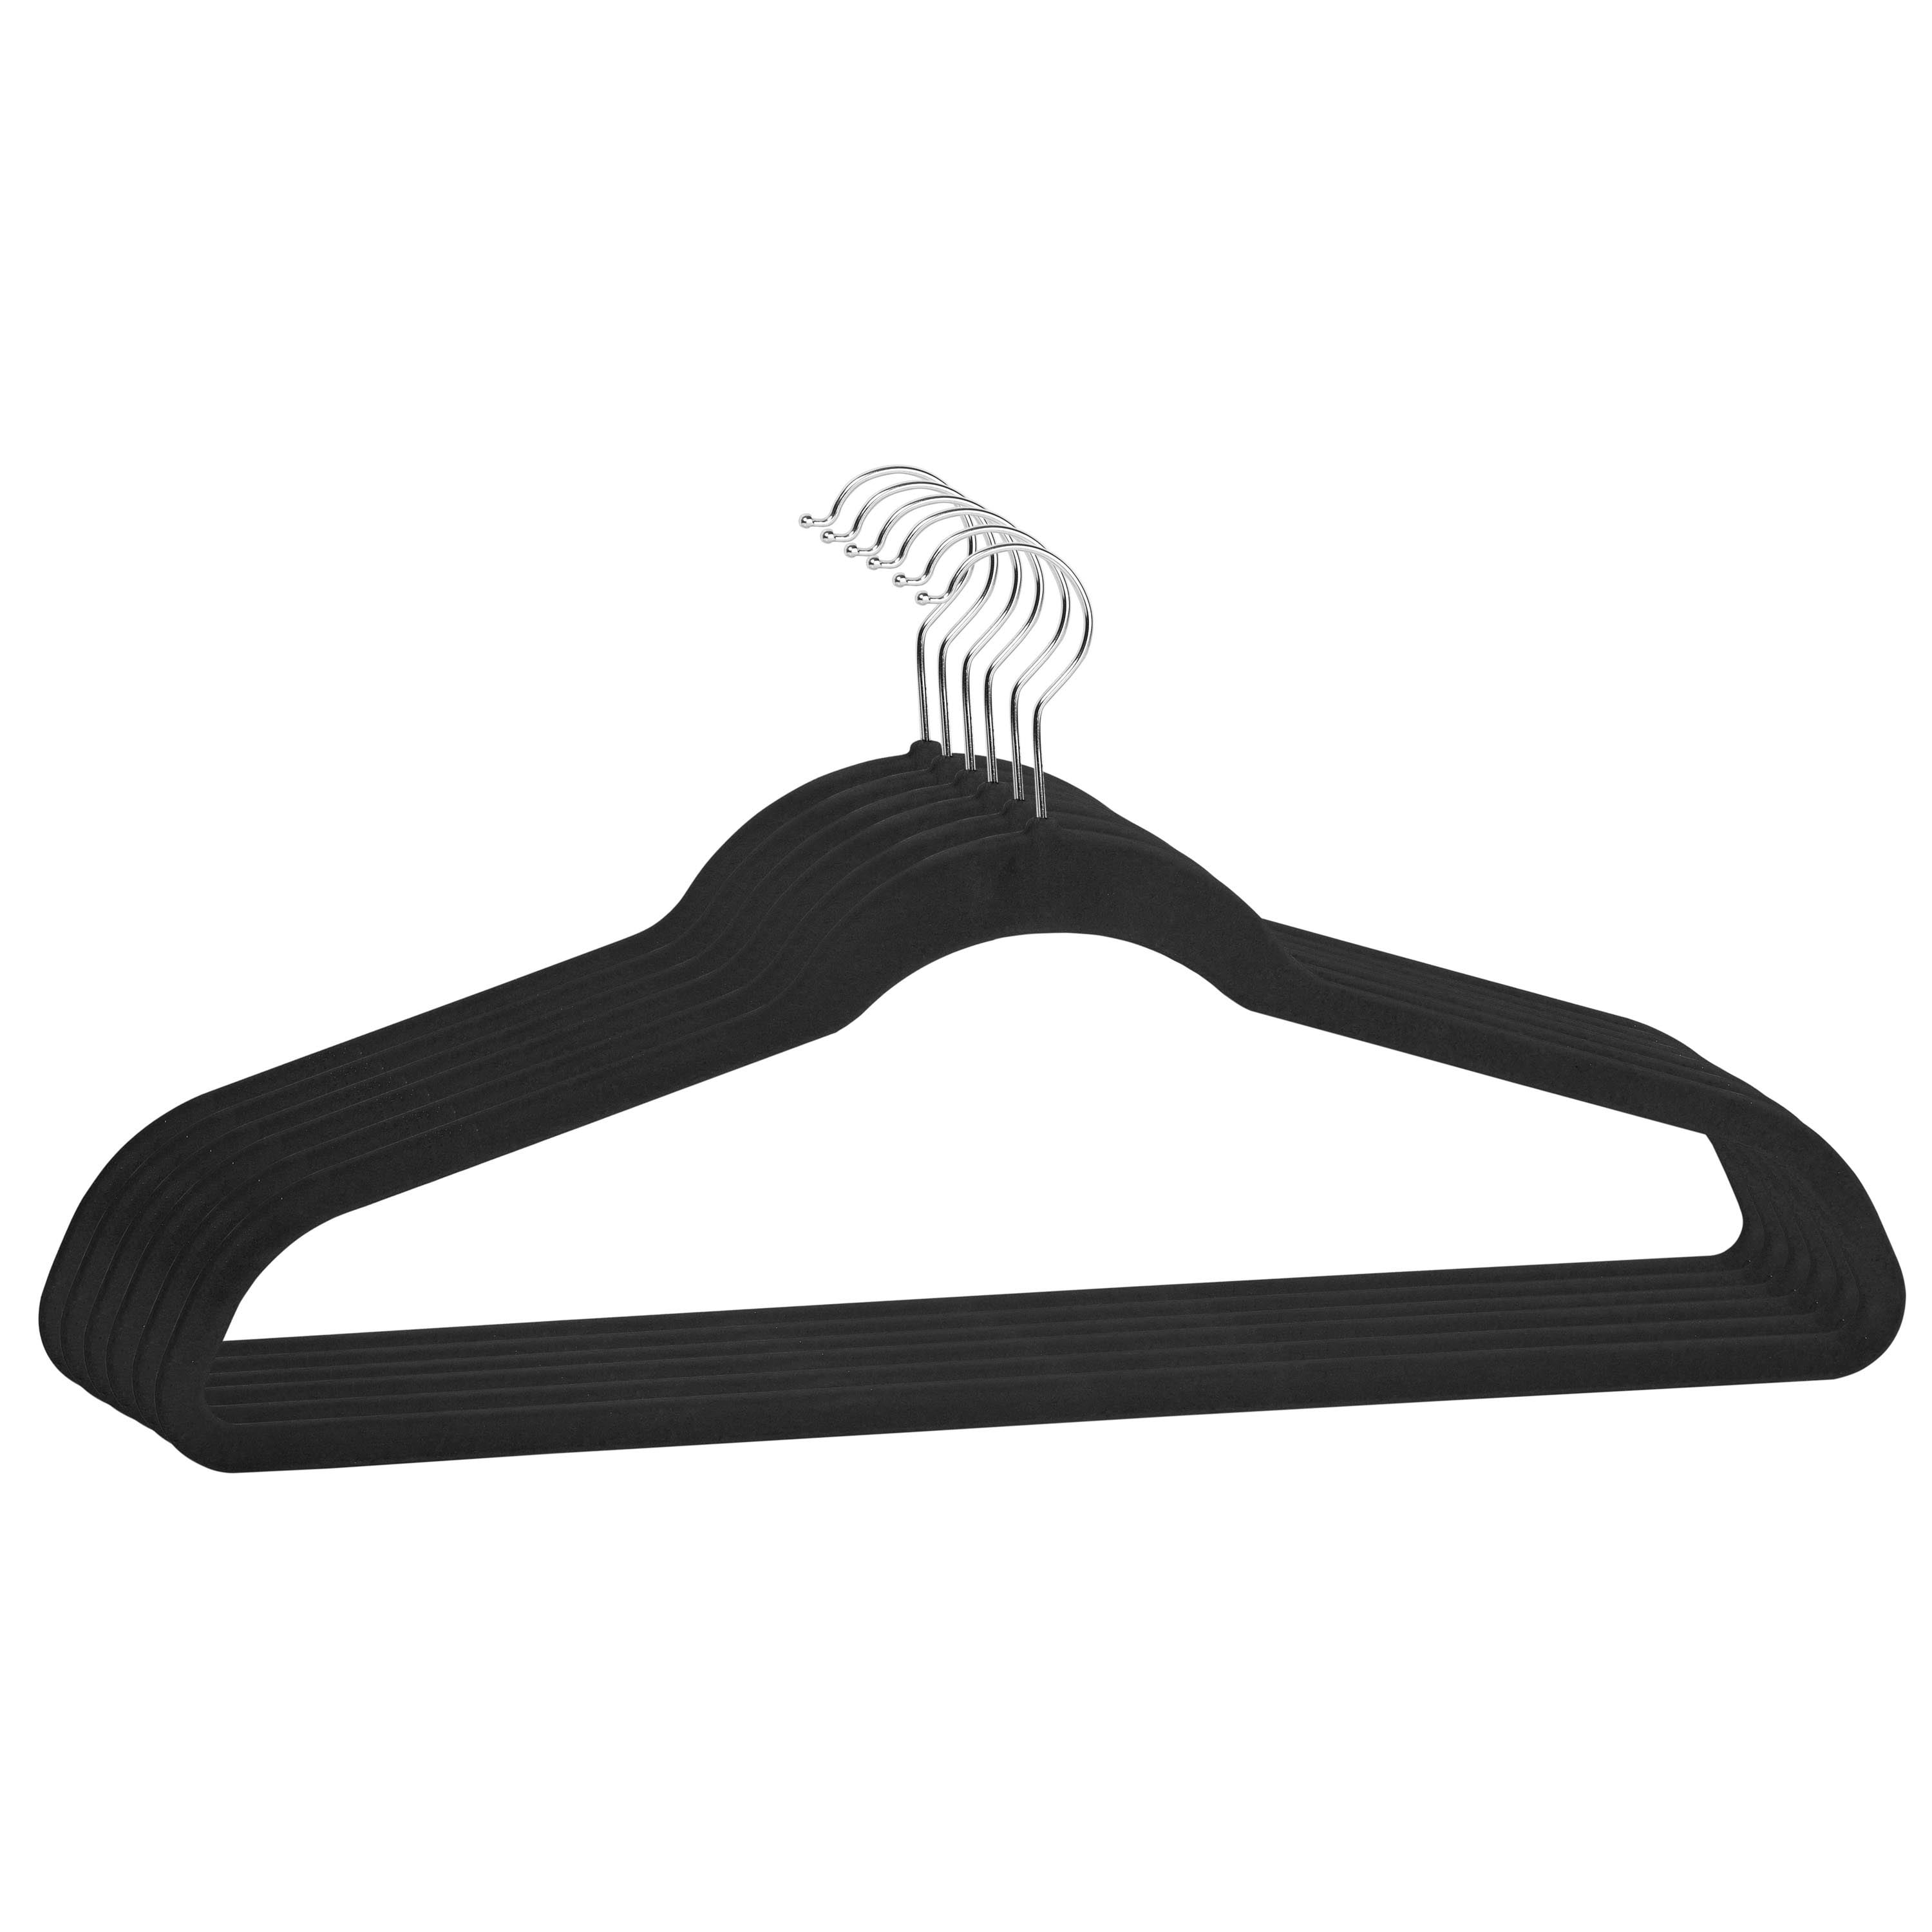 Extra Wide Coat Hangers Adult Clothes 49cm Strong Black Plastic Shirt Top  Dress